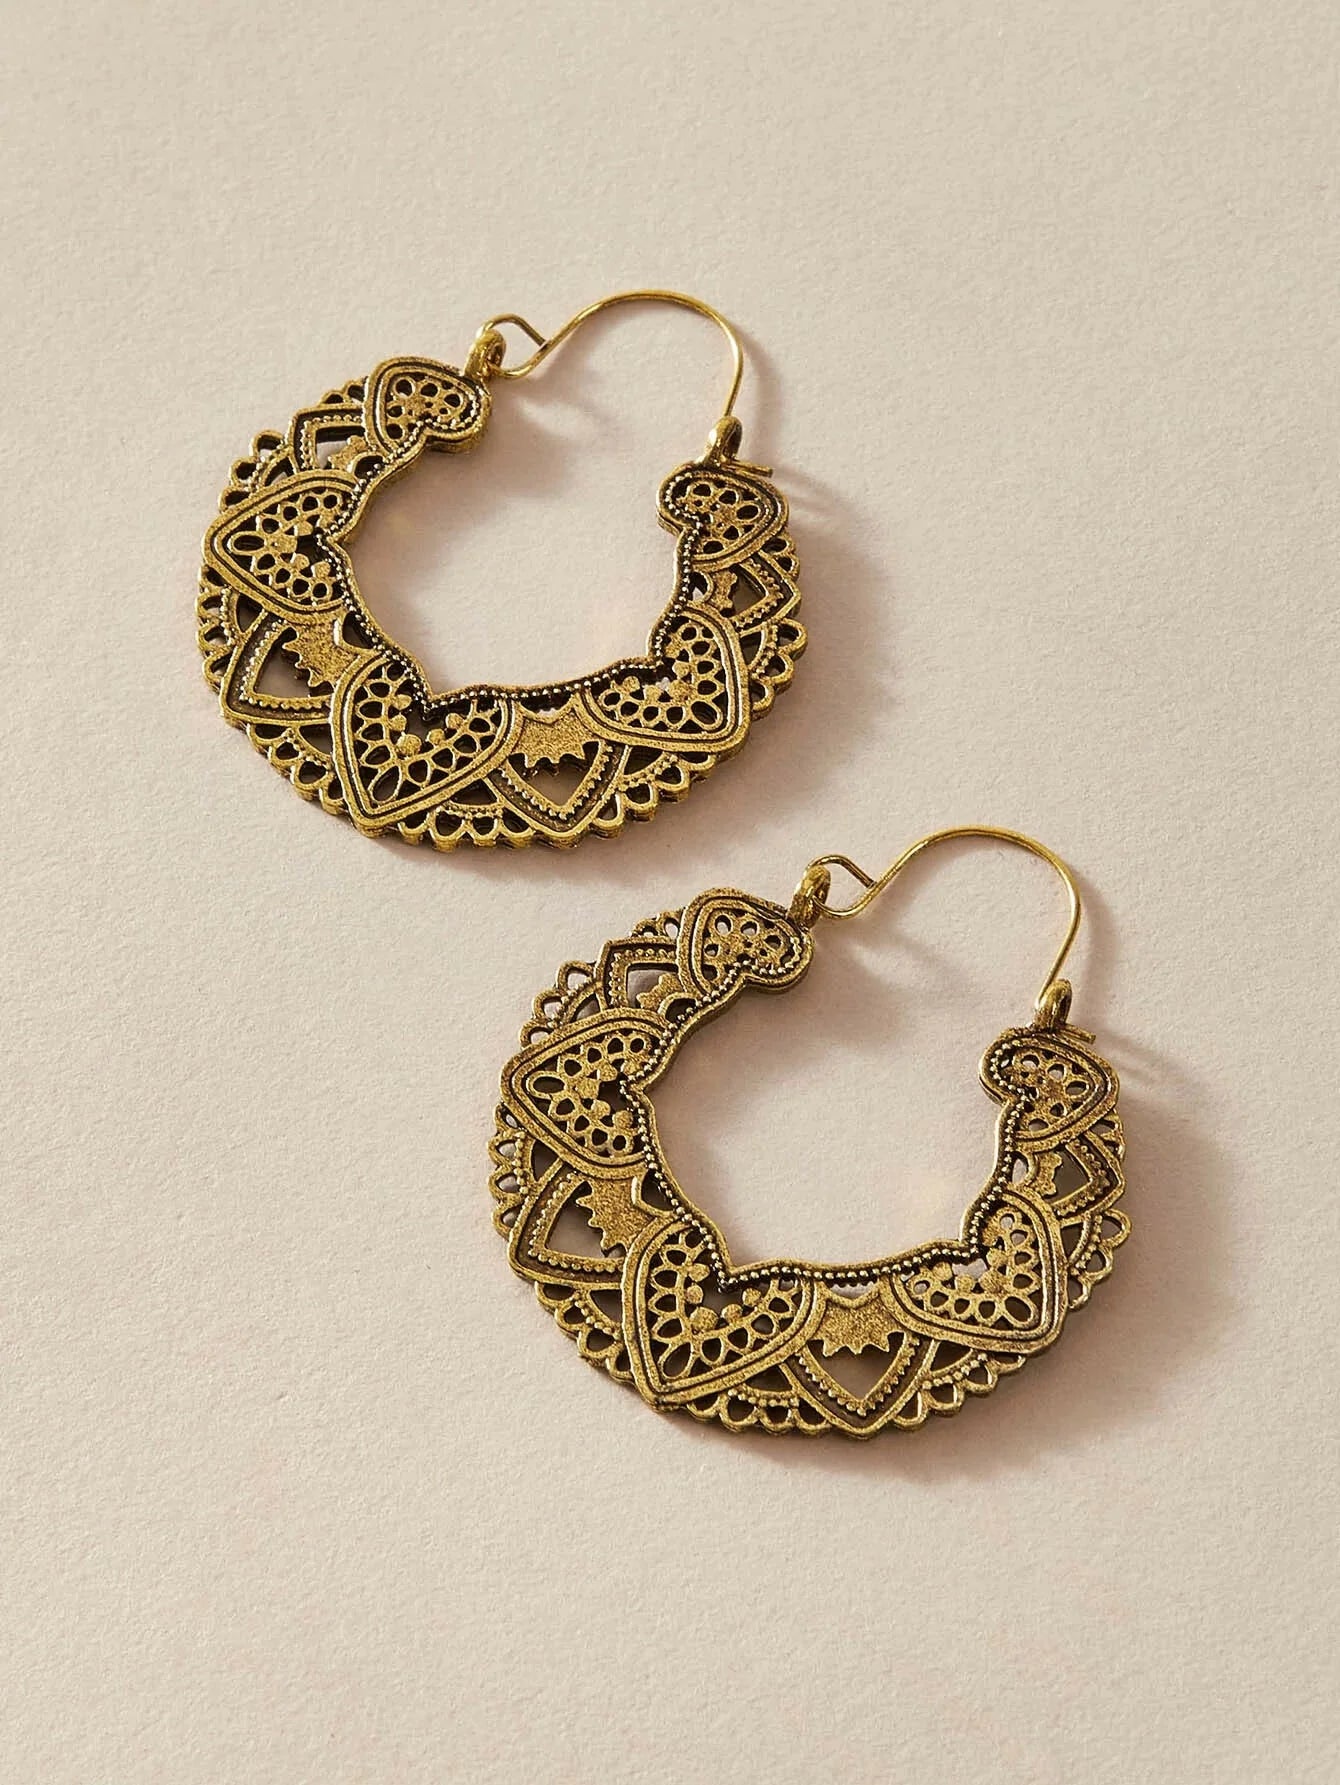 Buy Shein 1pair Bohemian Hollow Out Drop Earrings in Pakistan